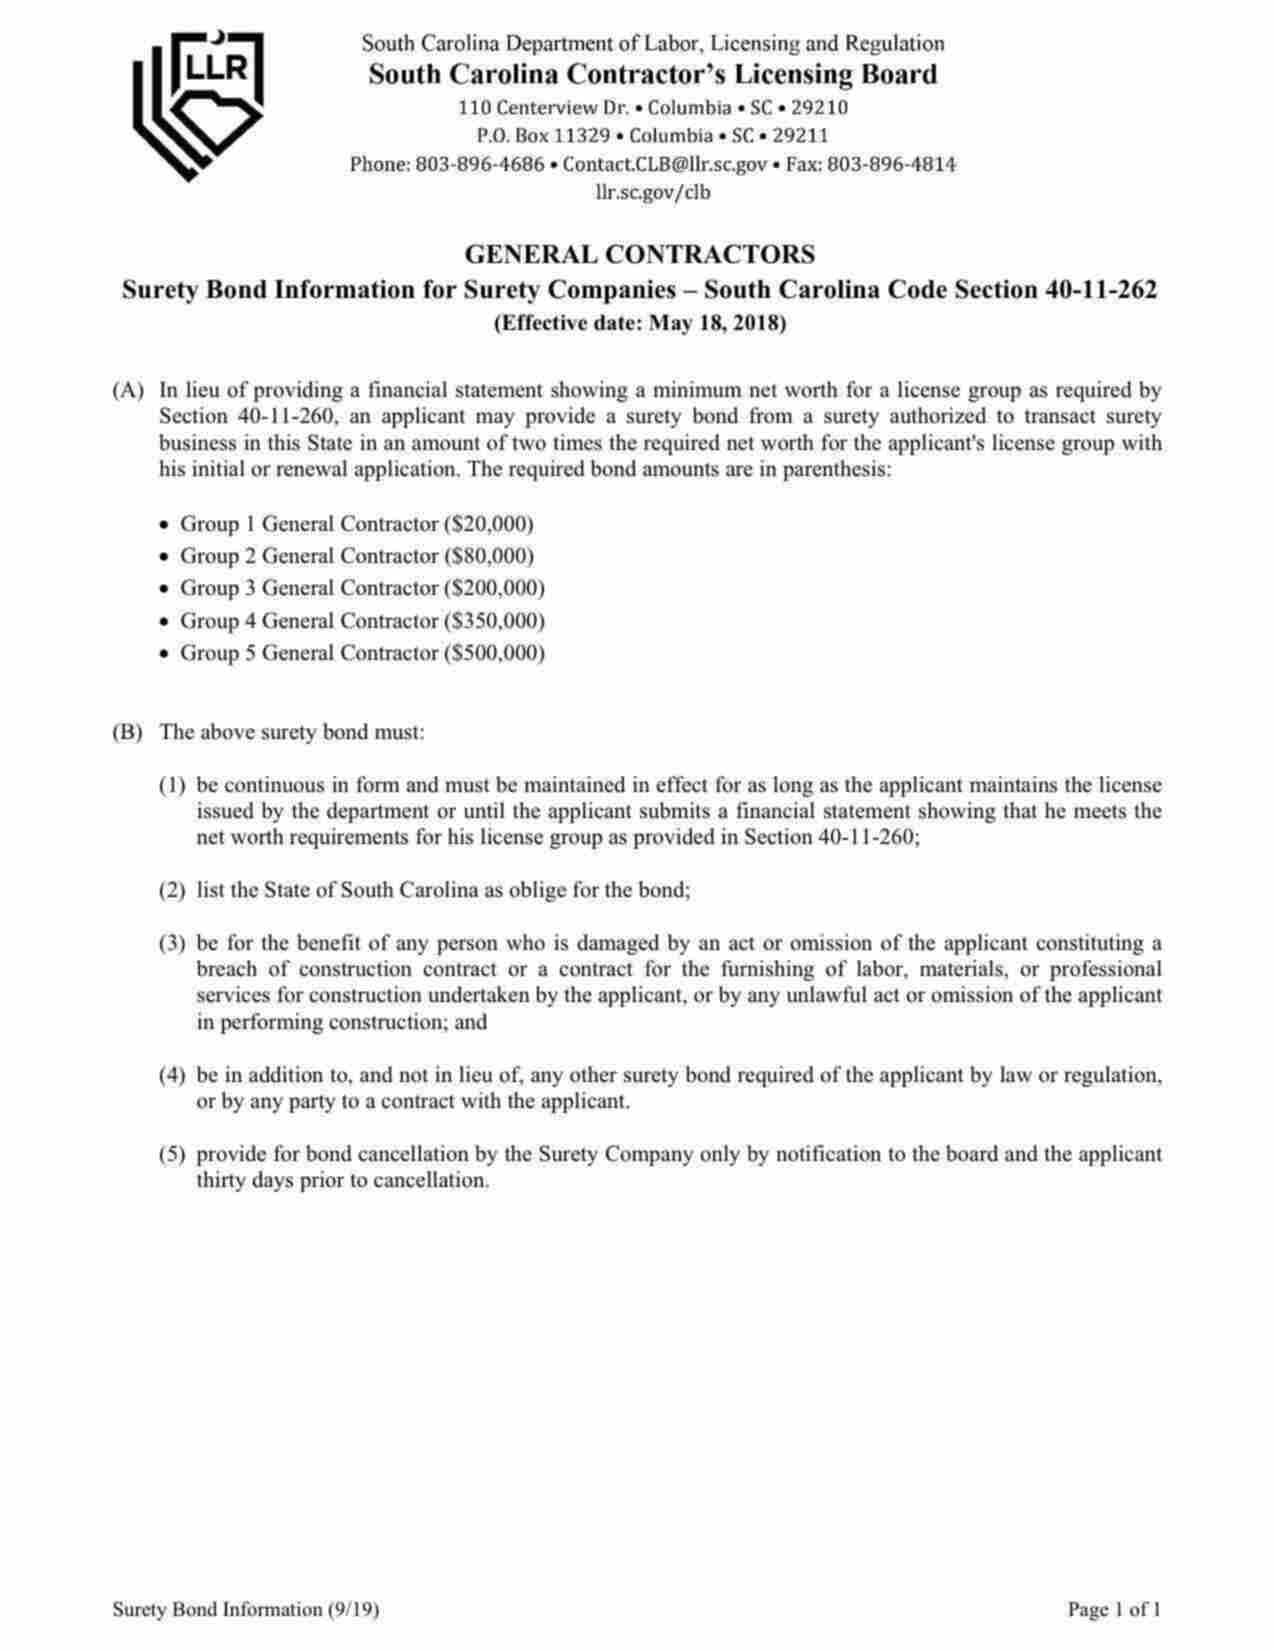 South Carolina General Contractor (Group 2) Bond Form